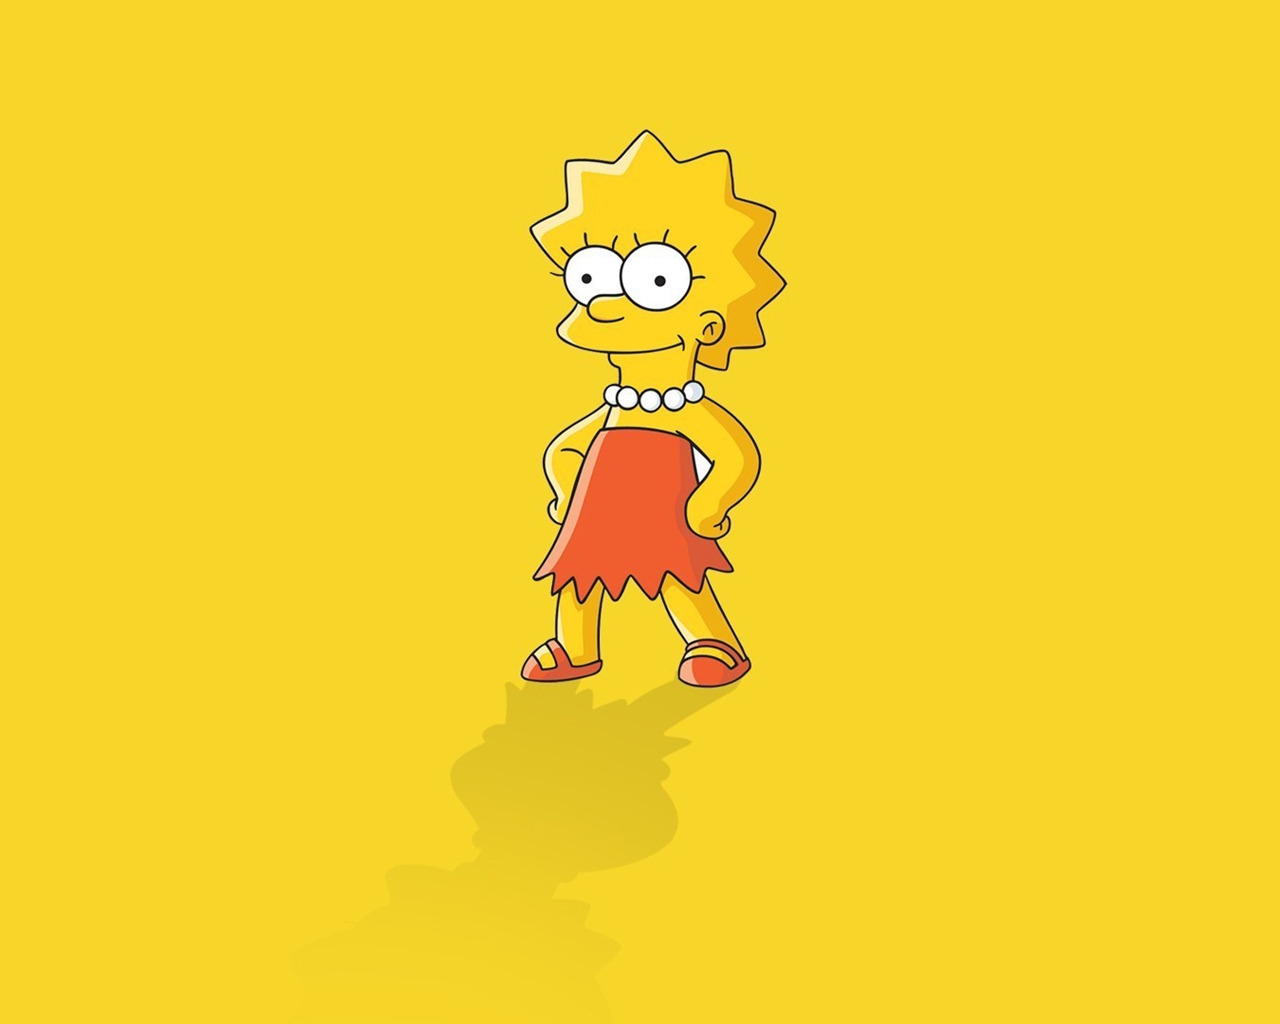 Lisa Simpson for 1280 x 1024 resolution